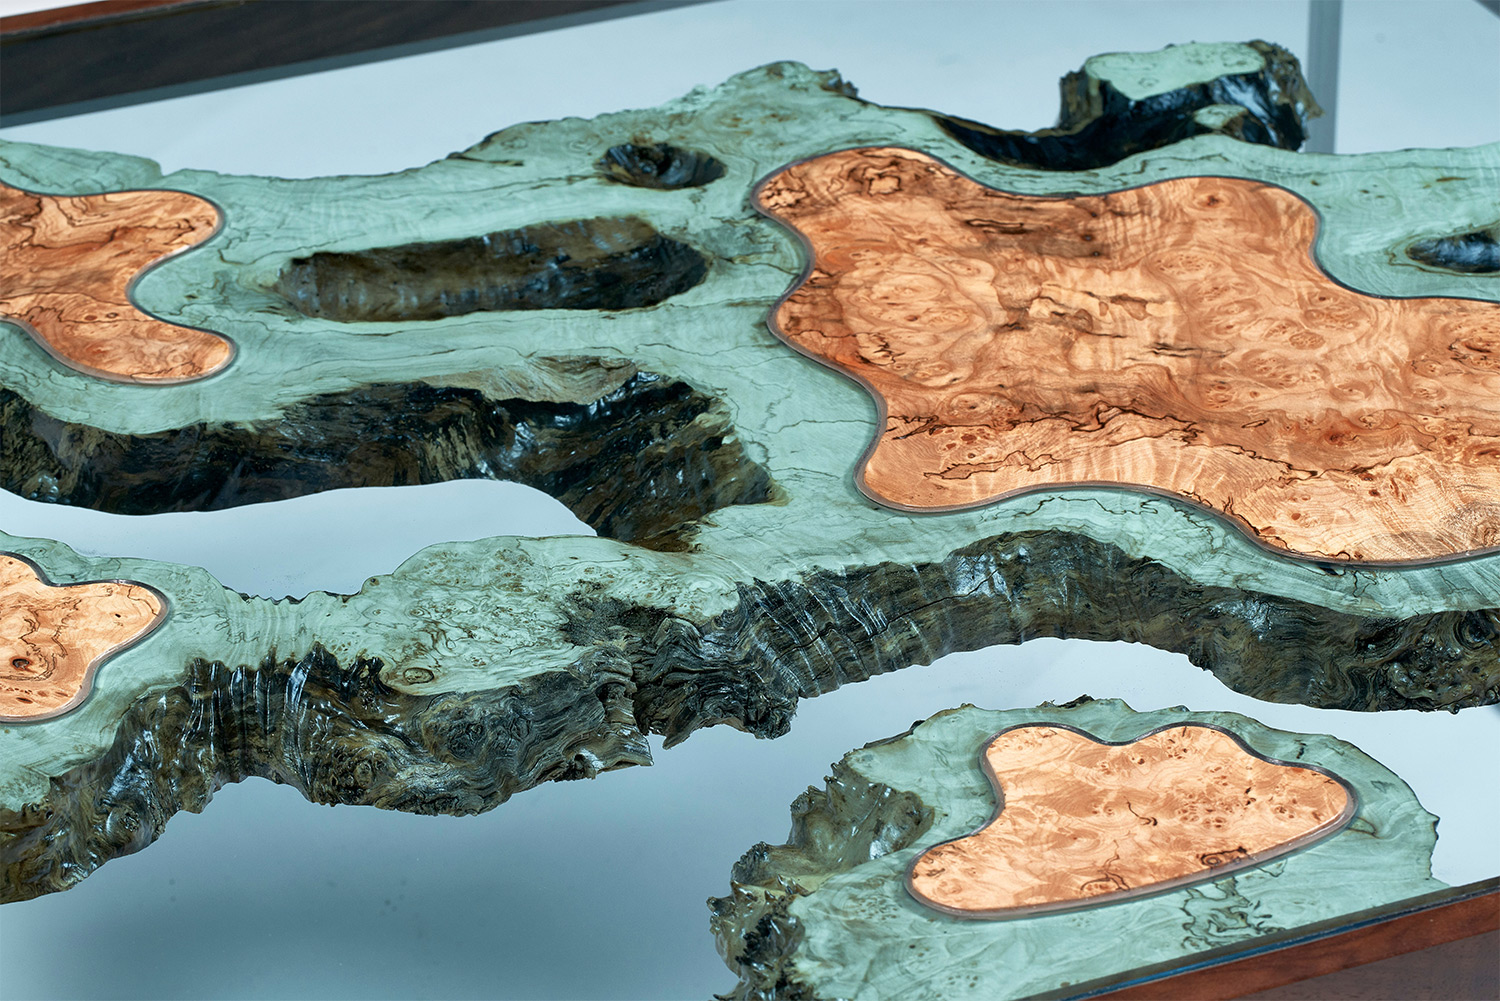 Islands of Wood Float Amidst Sea of Glass in New ‘Archipelago’ Furniture by Greg Klassen